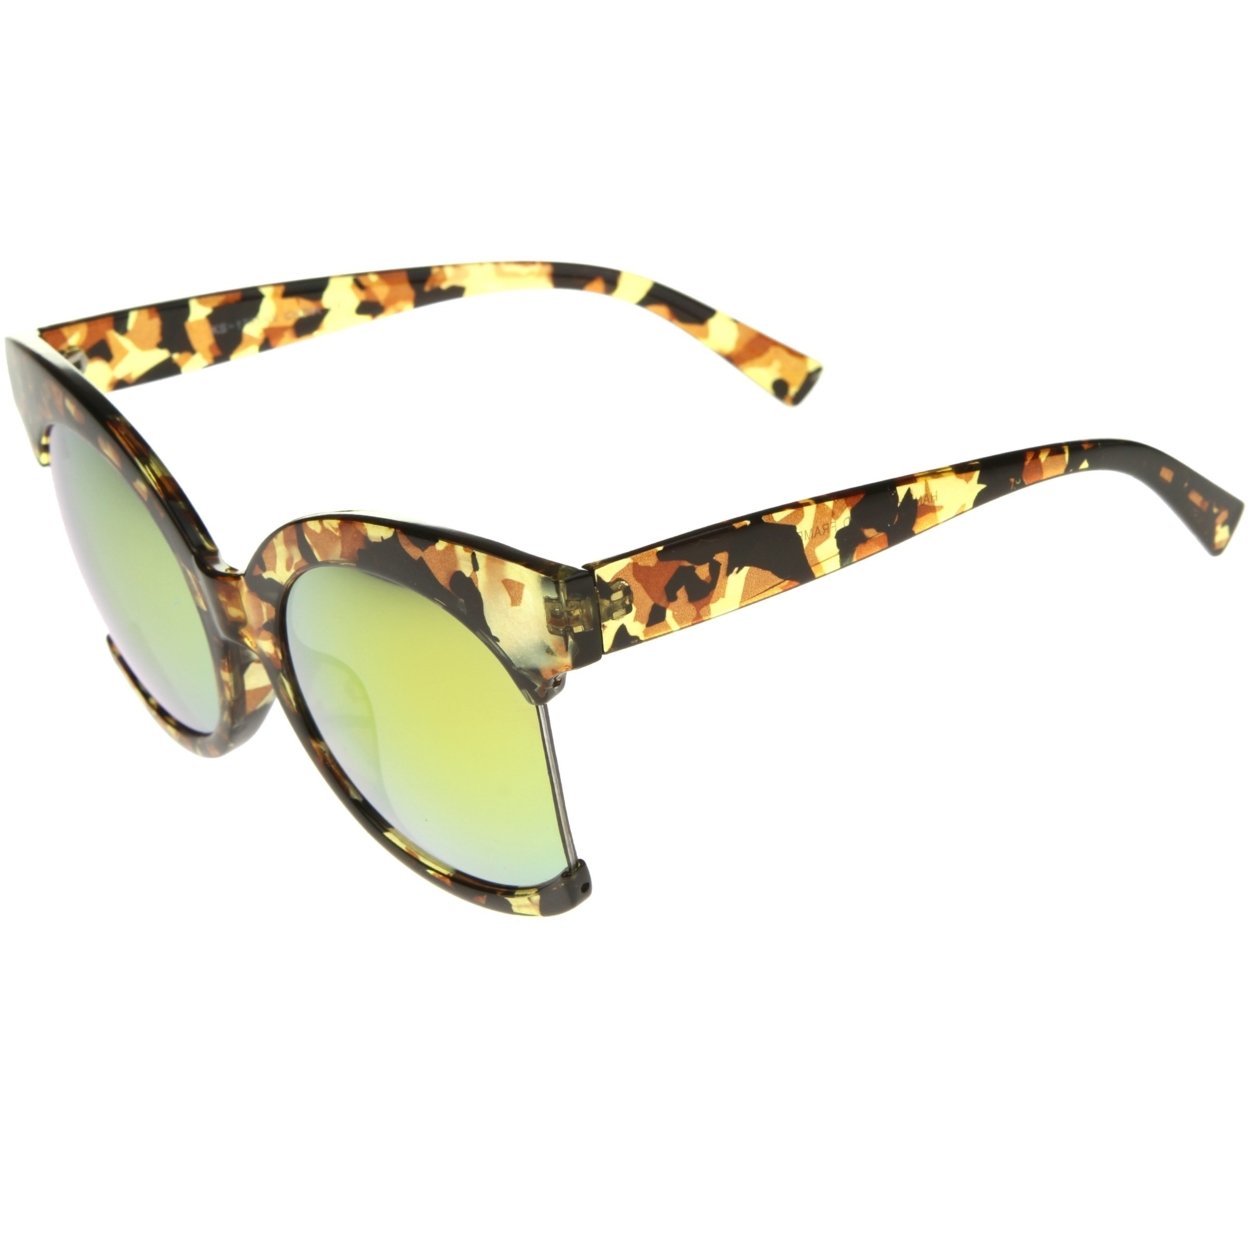 Womens Oversize Side Cut Marble Frame Iridescent Lens Cat Eye Sunglasses 59mm - Red / Magenta Mirror